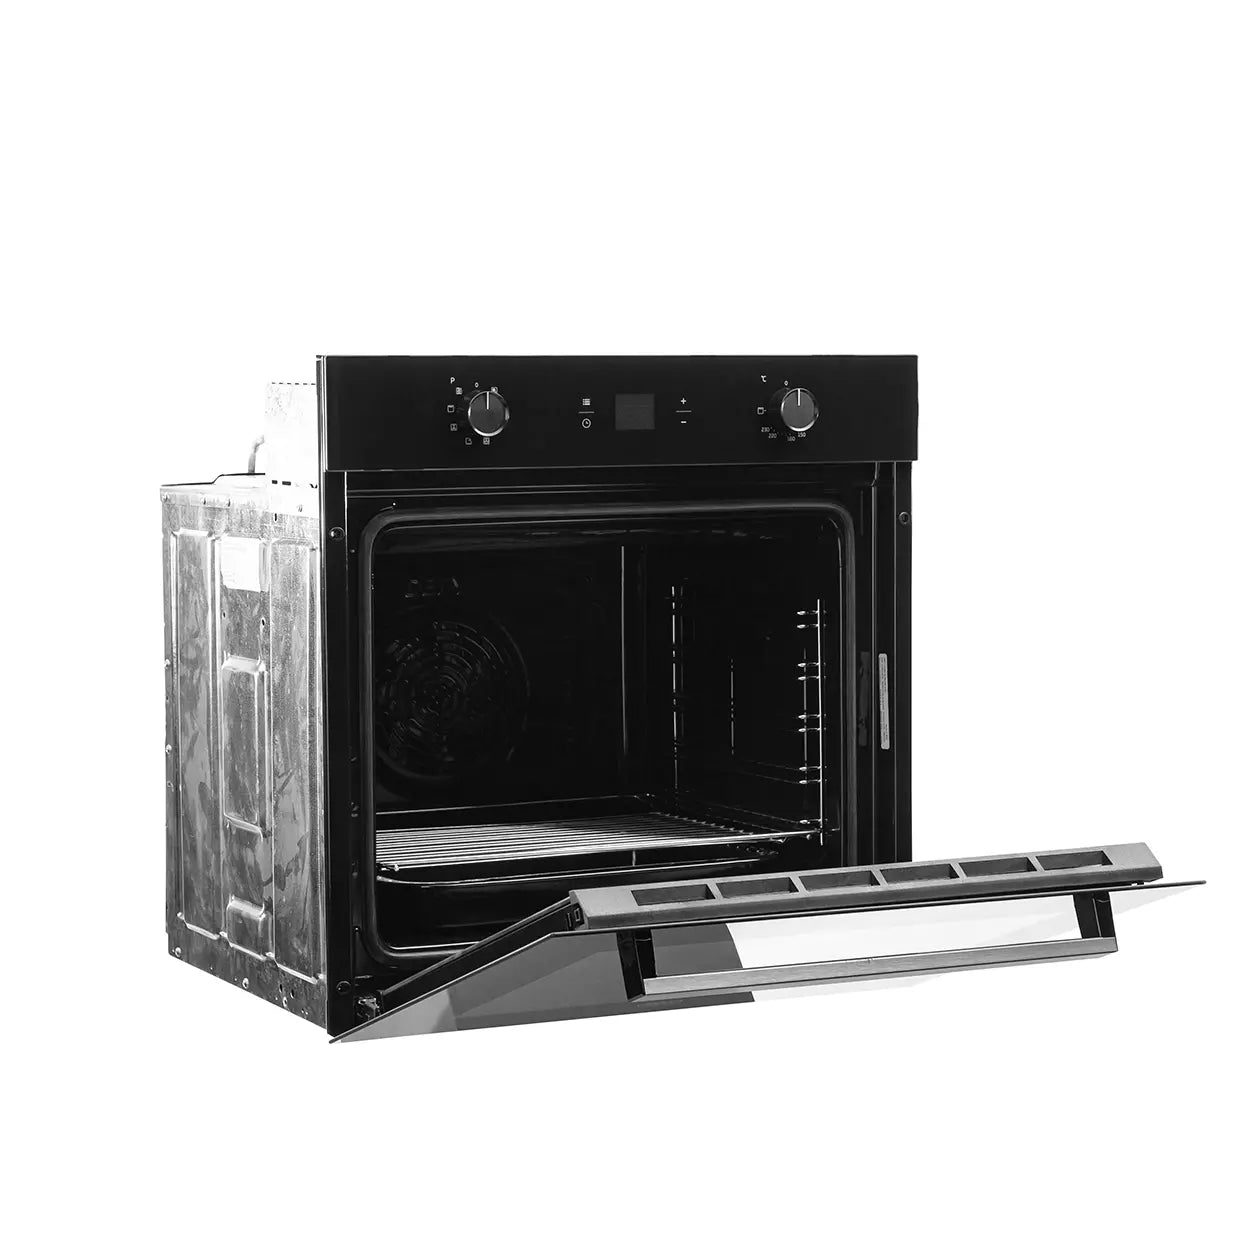 Defy 60cm Slimline Thermofan+ Eye-Level Oven - Black Glass - DBO489E